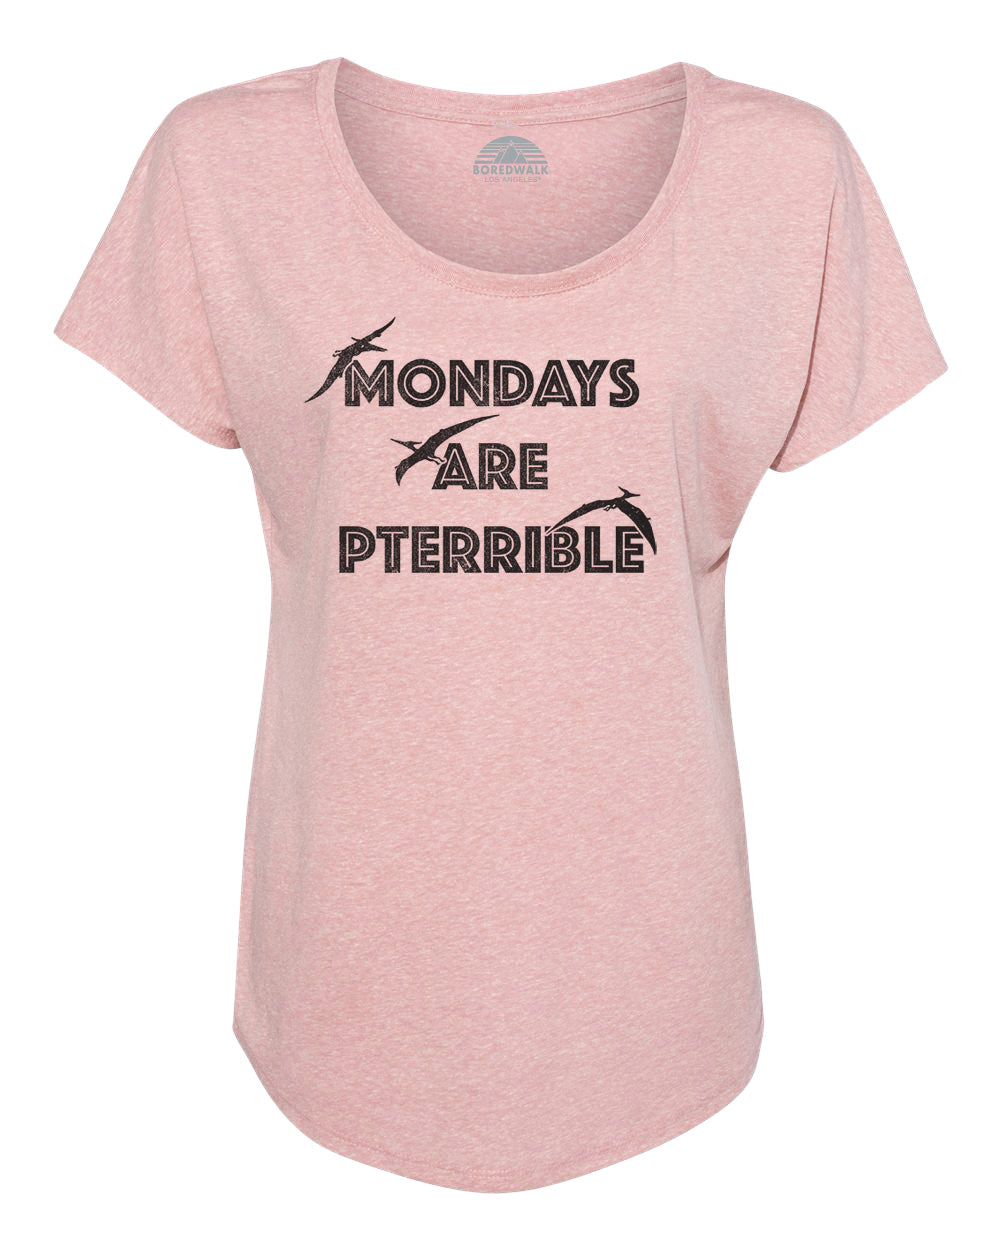 Women's Mondays Are Pterrible Scoop Neck T-Shirt